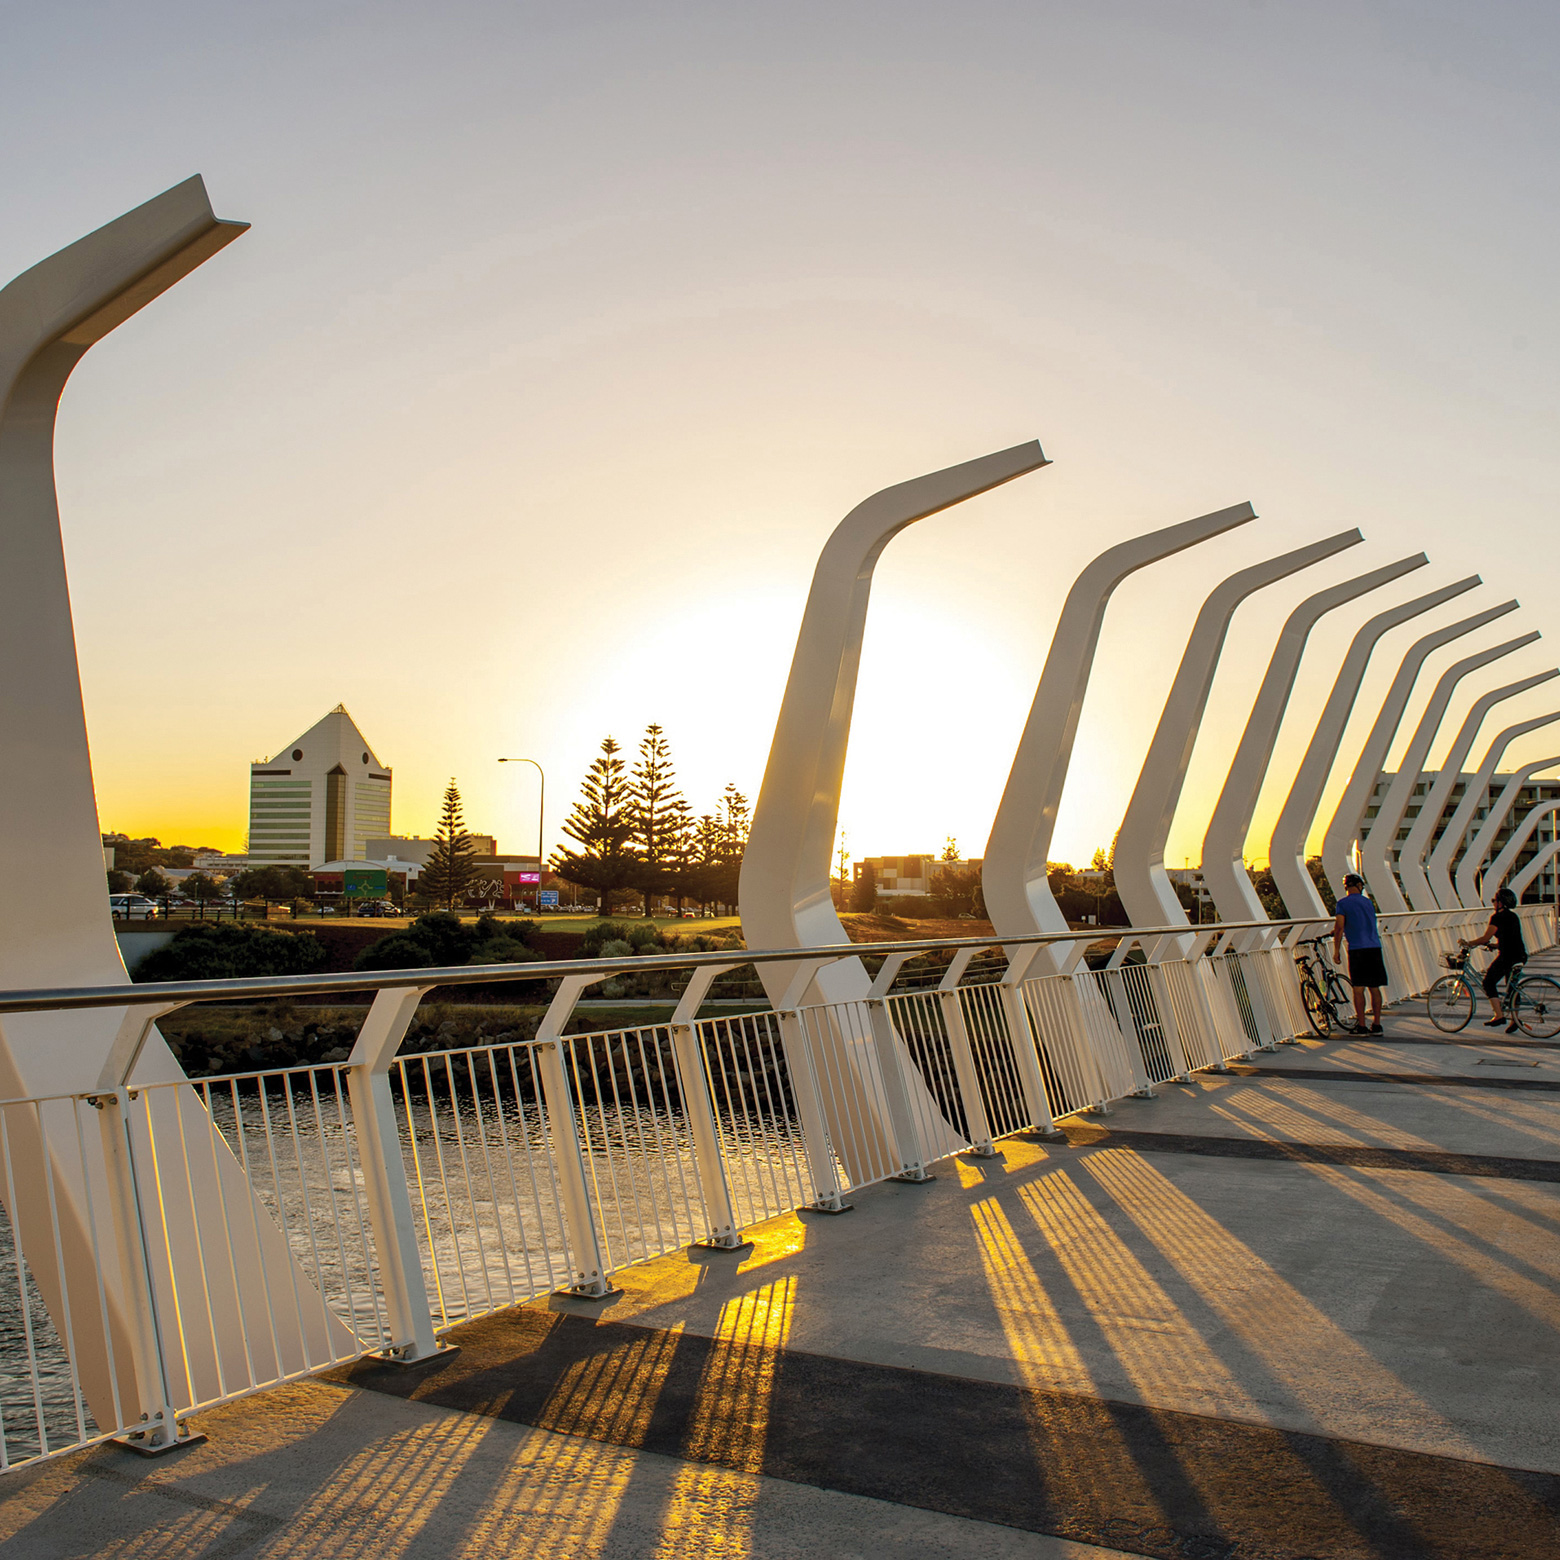 Featured image of Koombana Bay Foreshore Pedestrian Bridge